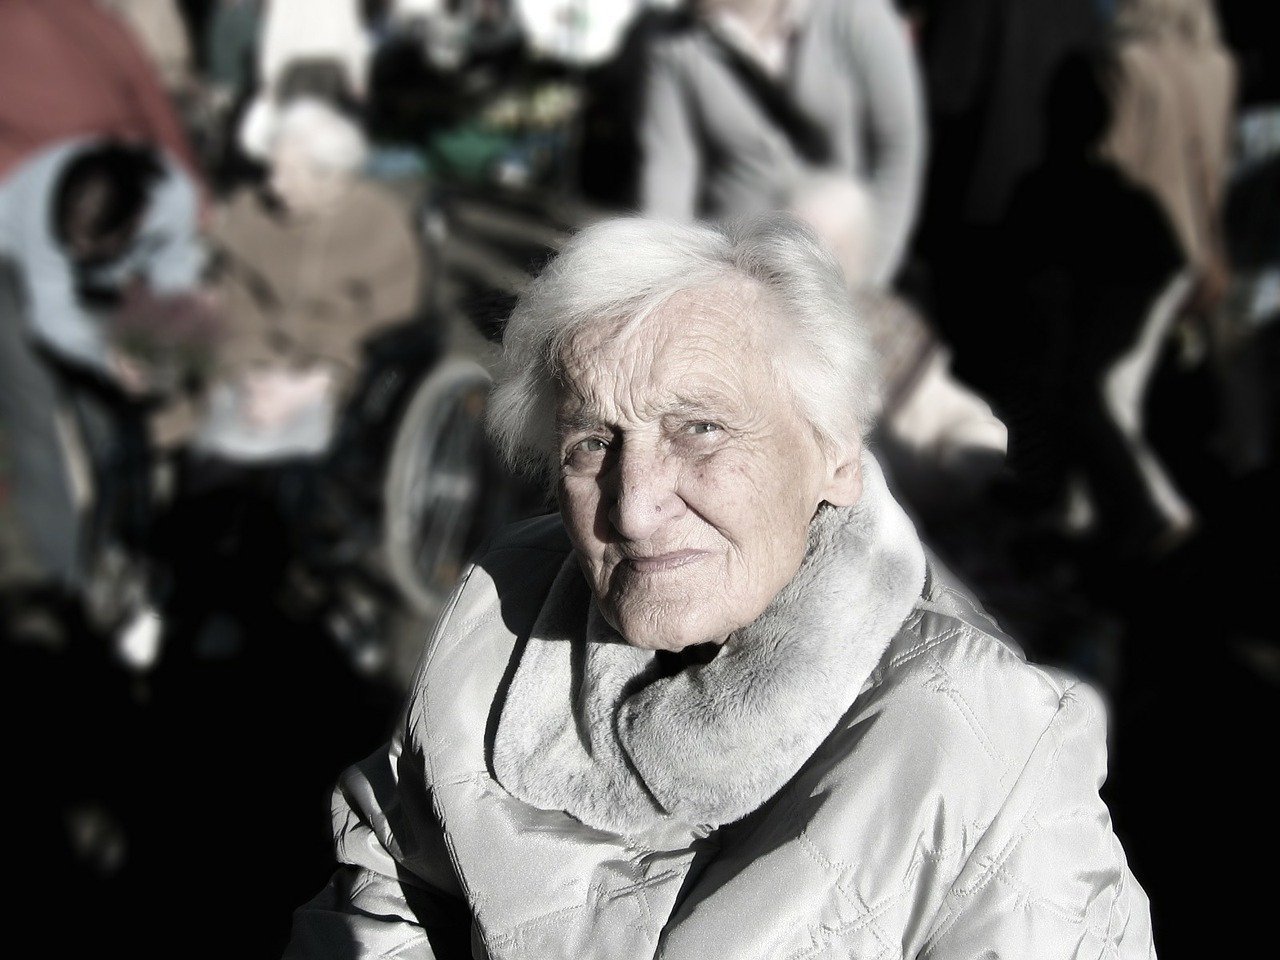 Great grandma frowning | Source: Pixabay